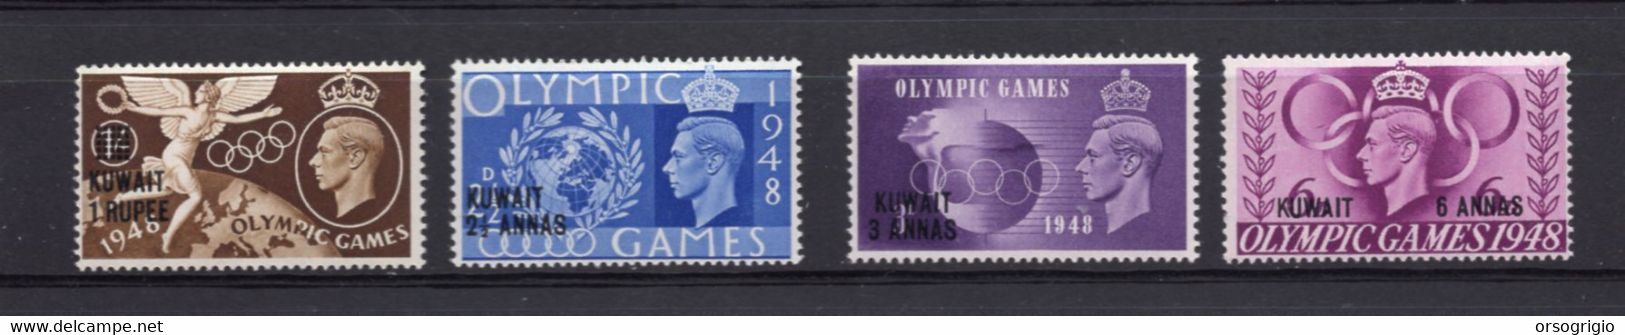 KUWAIT - GRAN BRETAGNA - OLYMPIC GAMES - 1948 - SERIE COMPLETA PERFETTA Lusso - Ete 1948: Londres